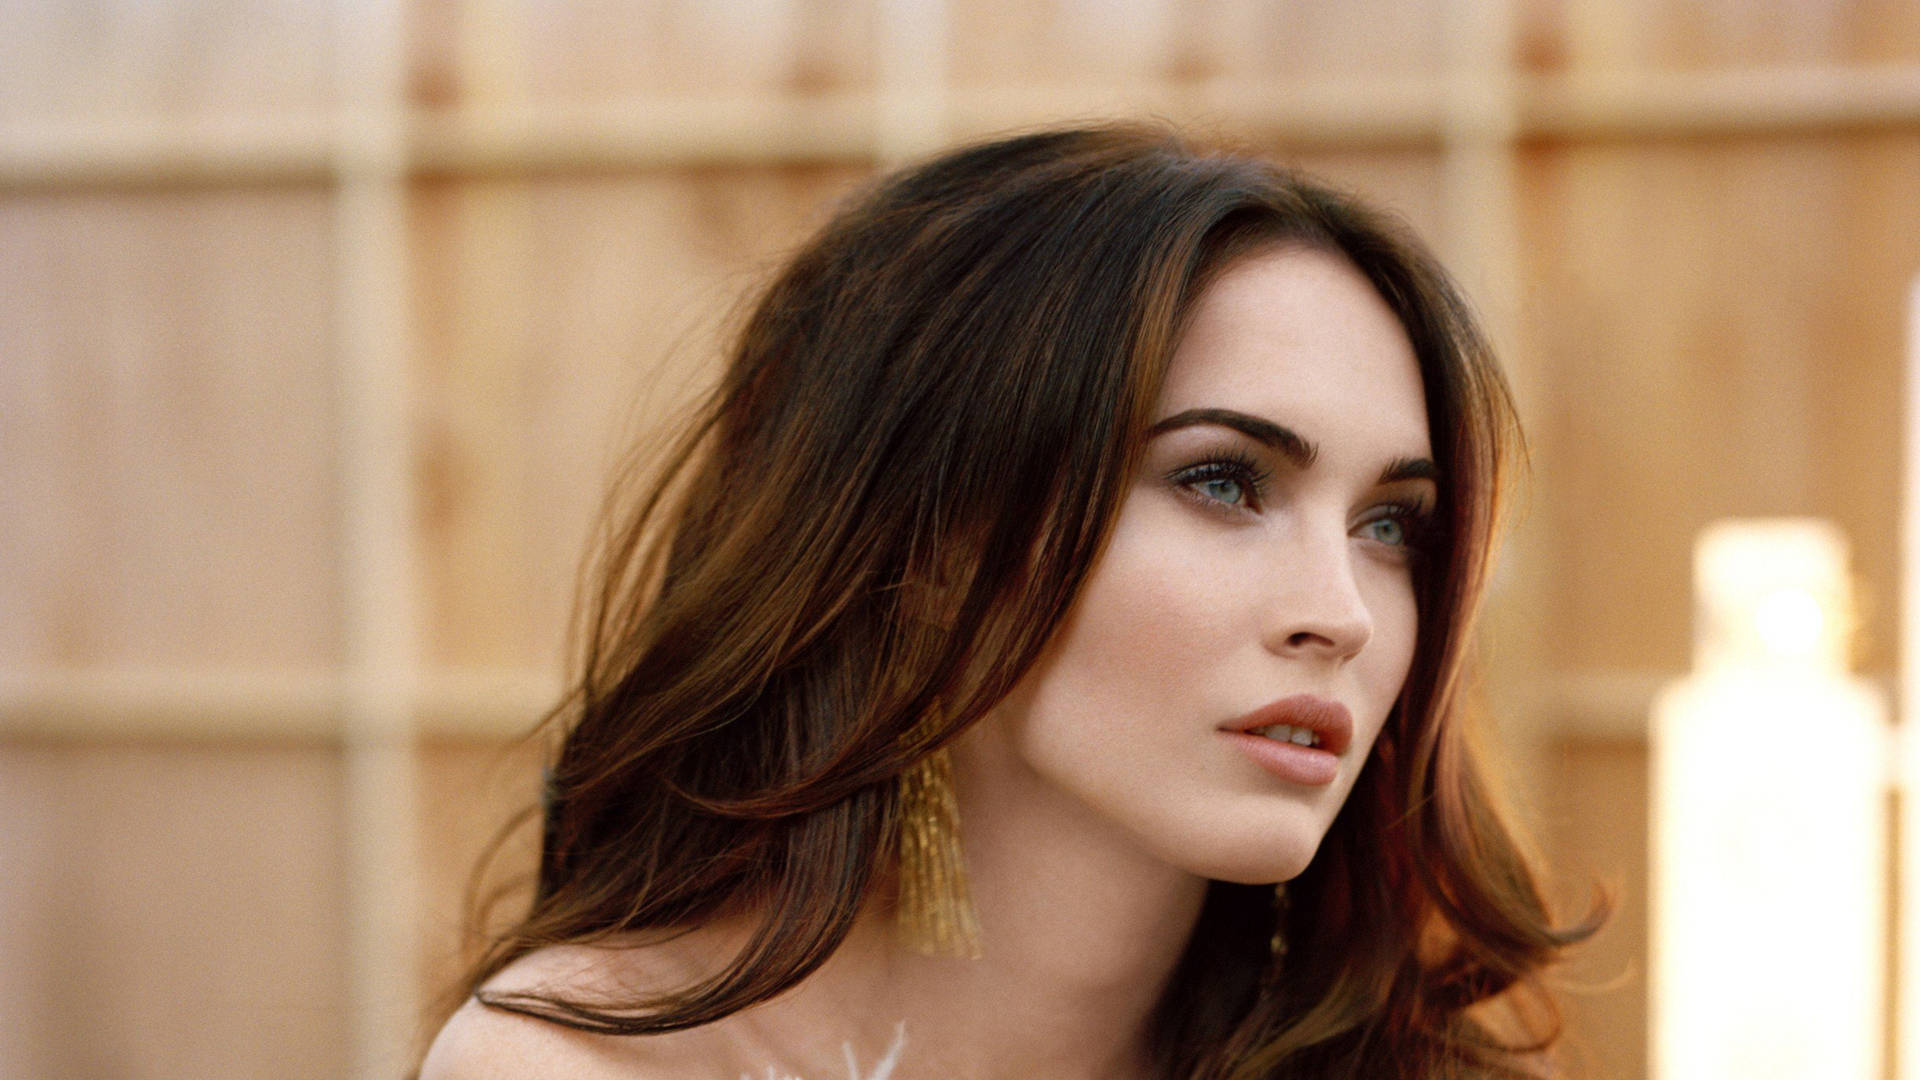 Megan Fox Looking Stunning In Beautiful Gold Earrings Background